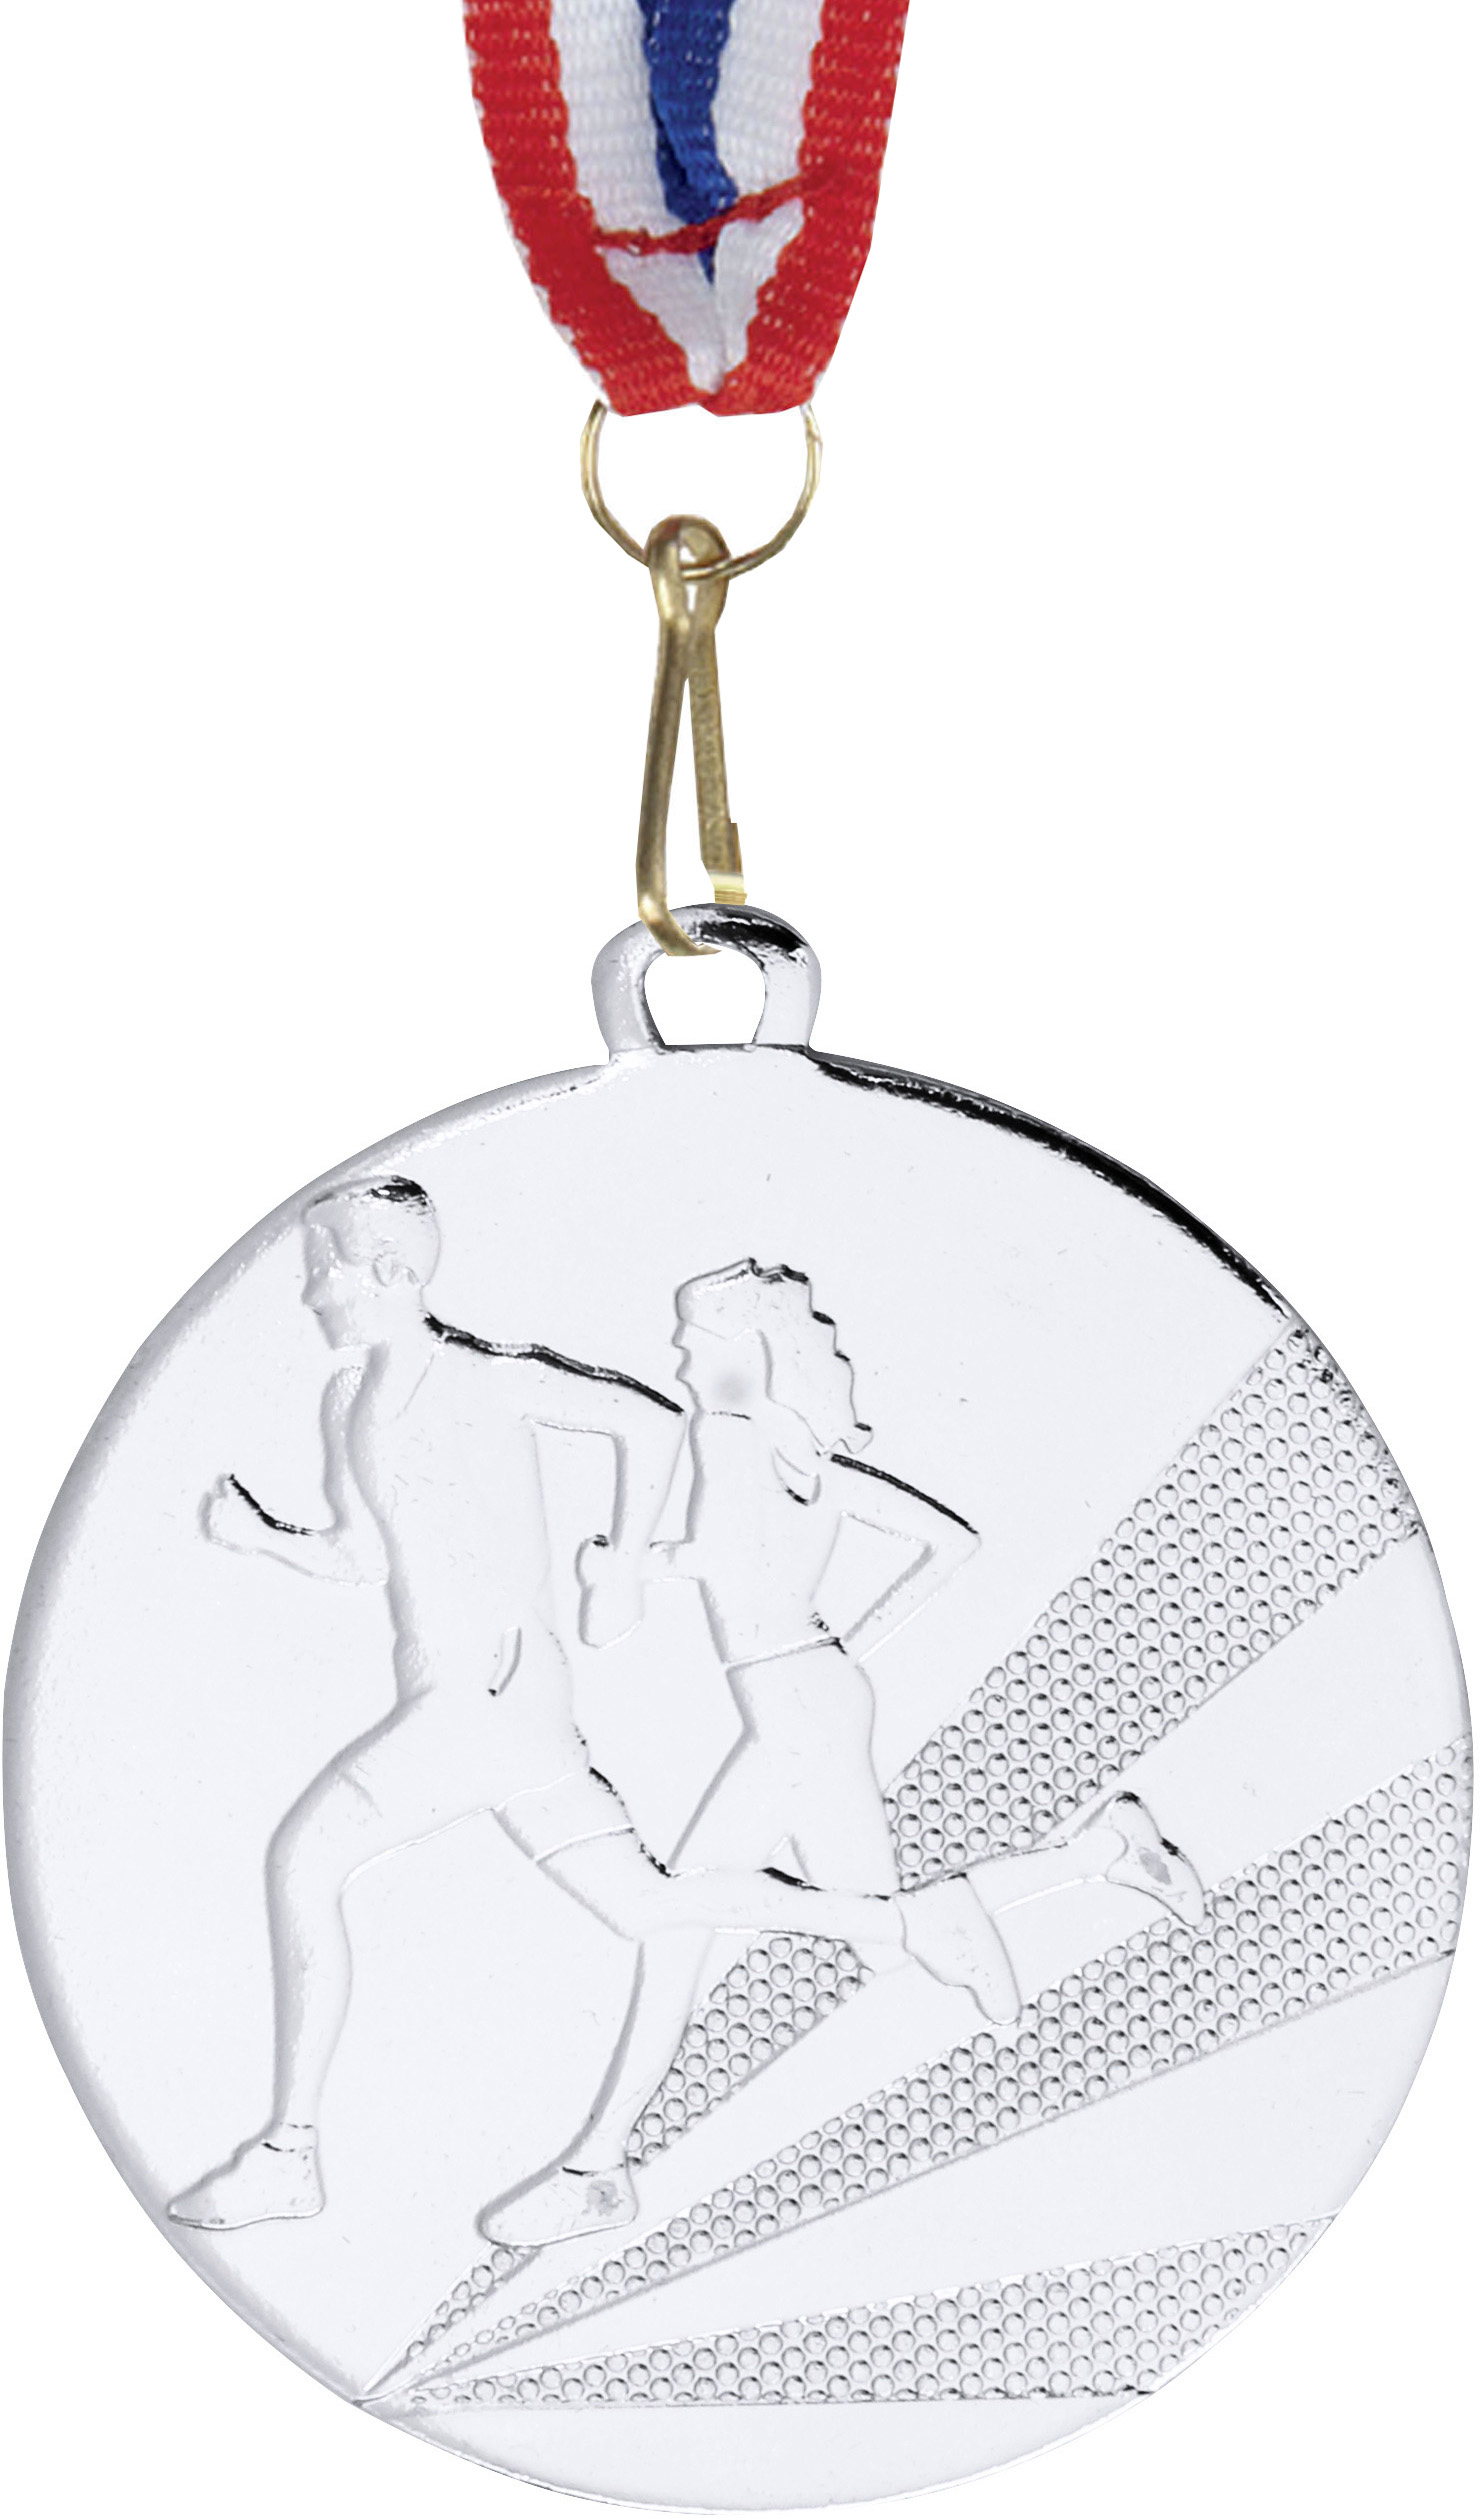 60mm Olympia Triathlon Medal & Ribbon Athletic Running Medals Gold Silver Bronze 